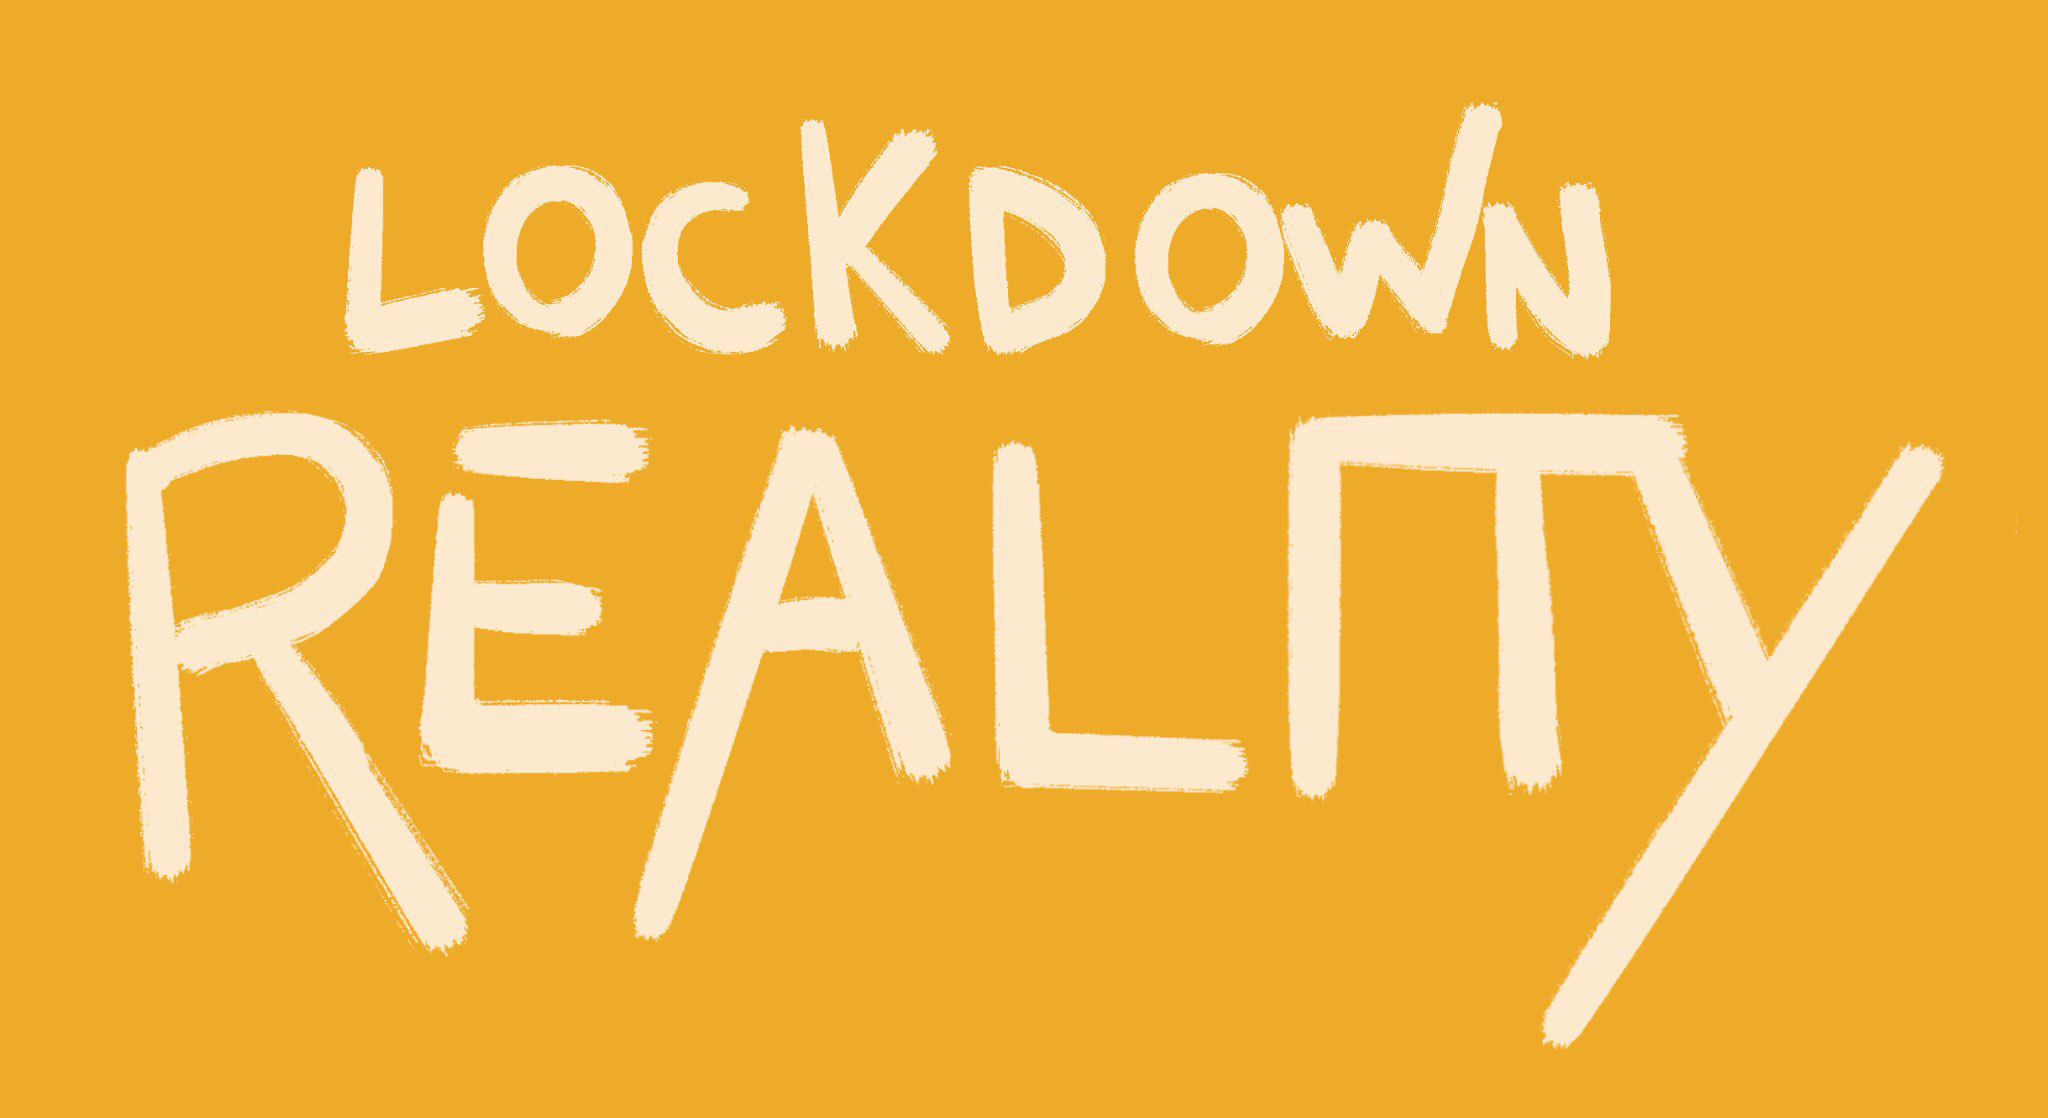 Lockdown reality